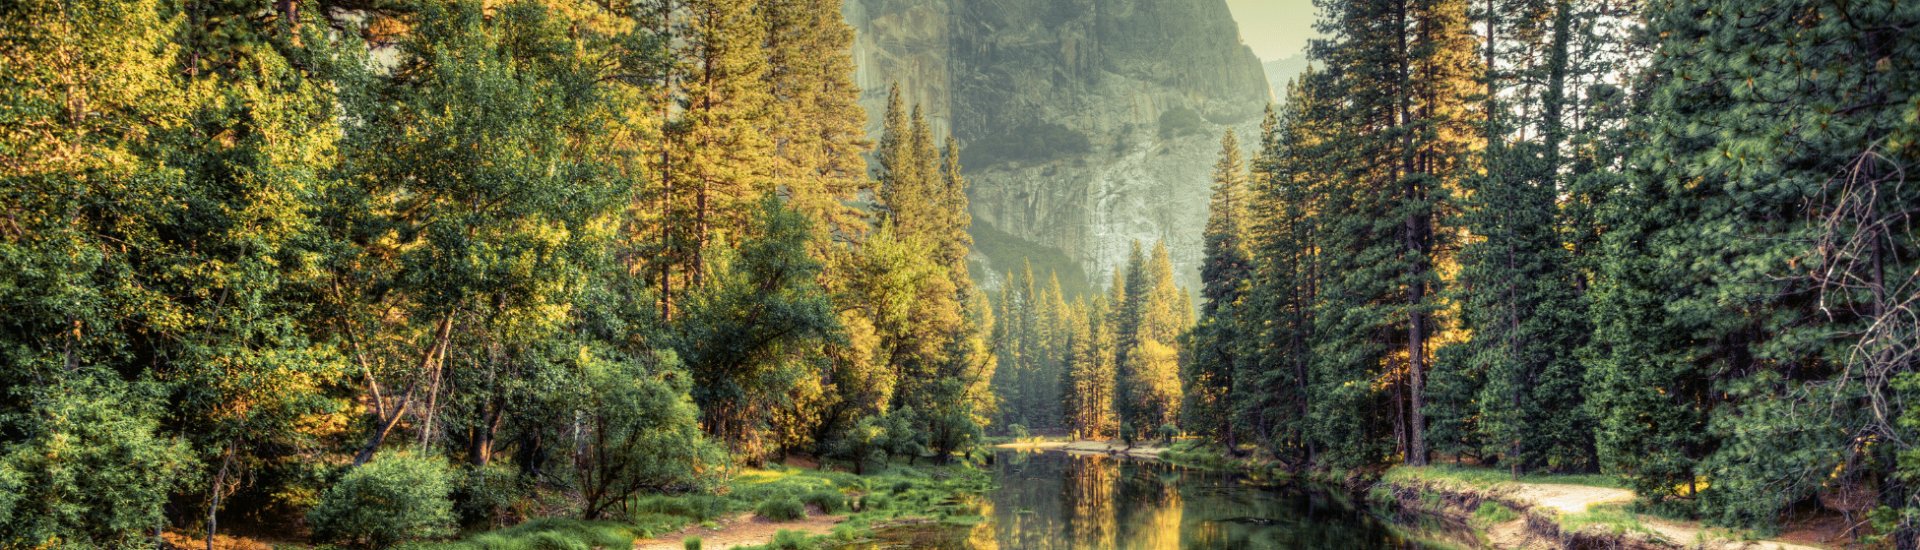 California Yosemite